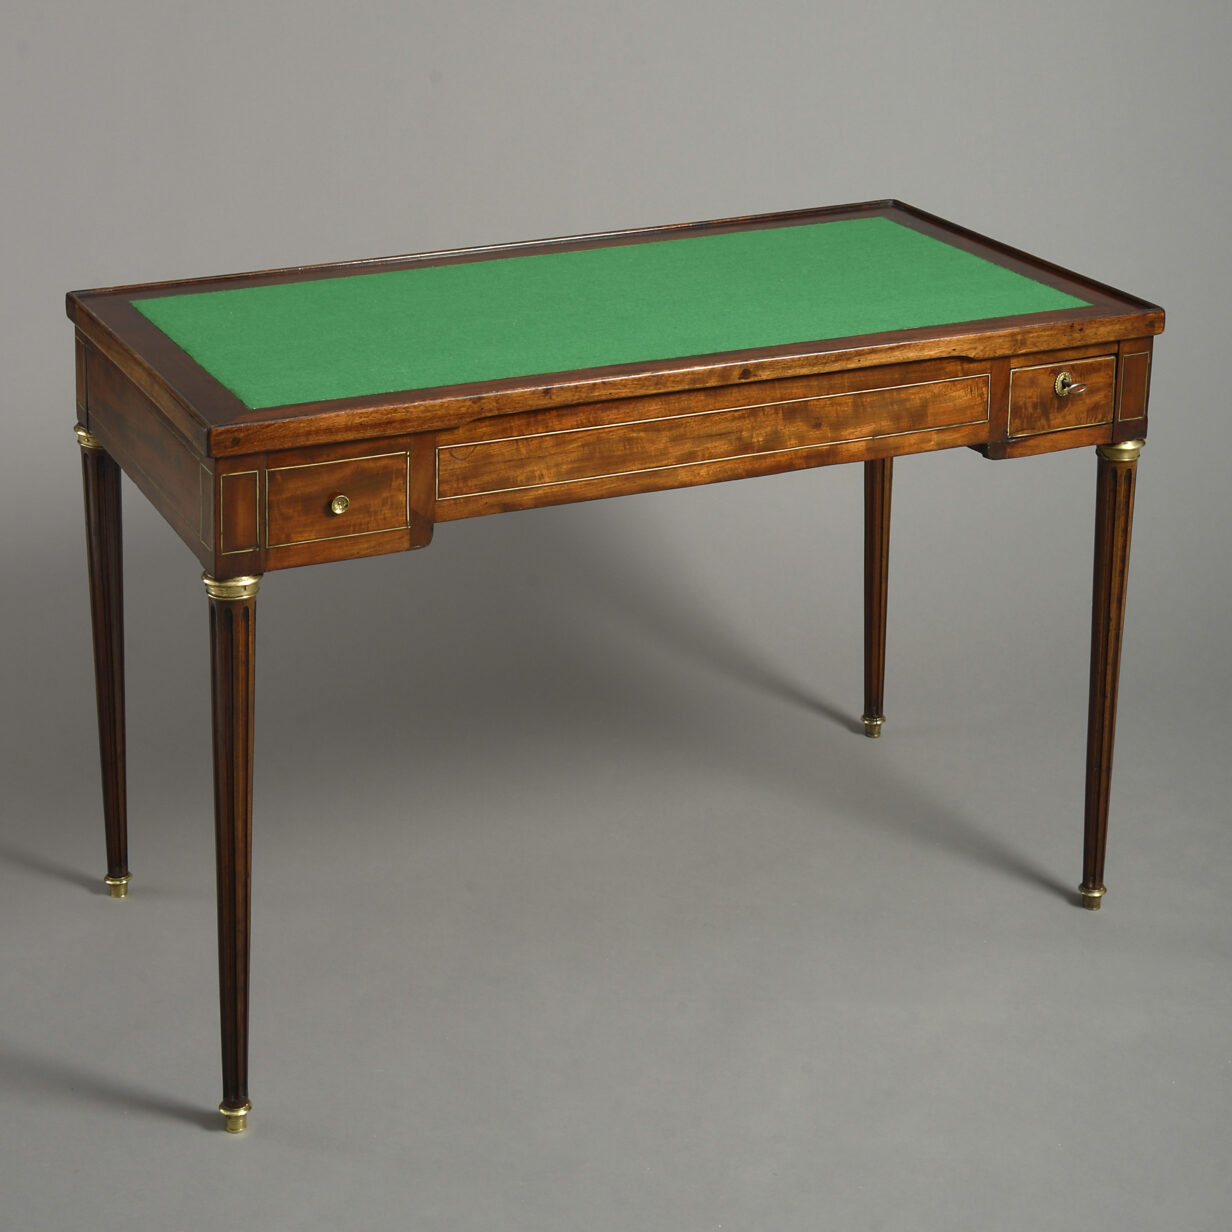 Louis XVI Period Tric Trac Games Table